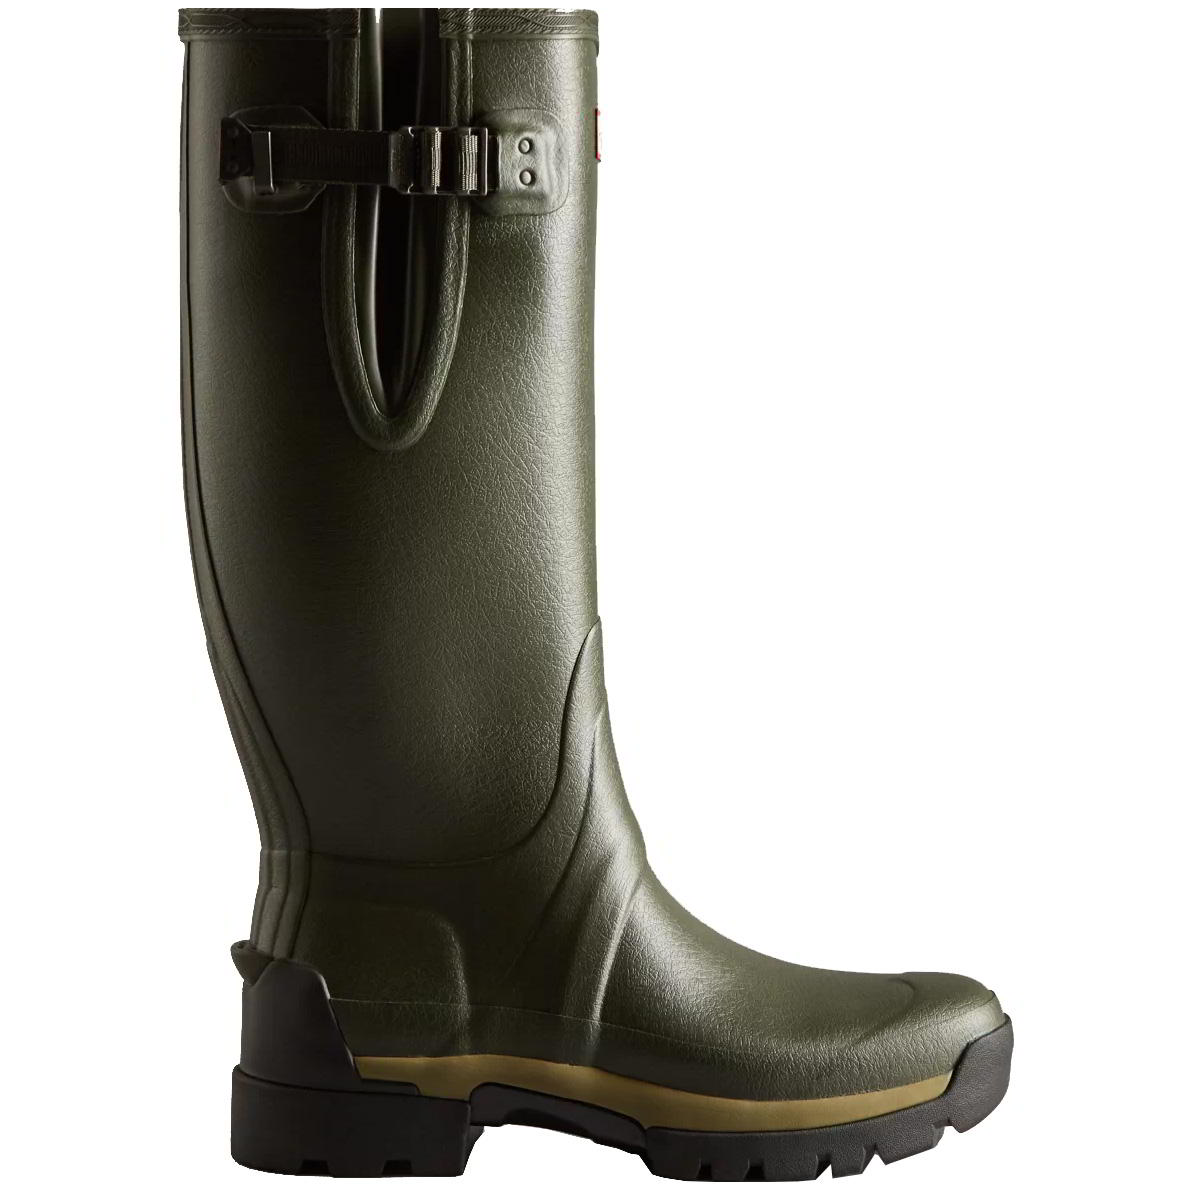 Hunter Mens Balmoral Adjustable Neoprene Wellies Rain Boots - UK 13 Green 2951